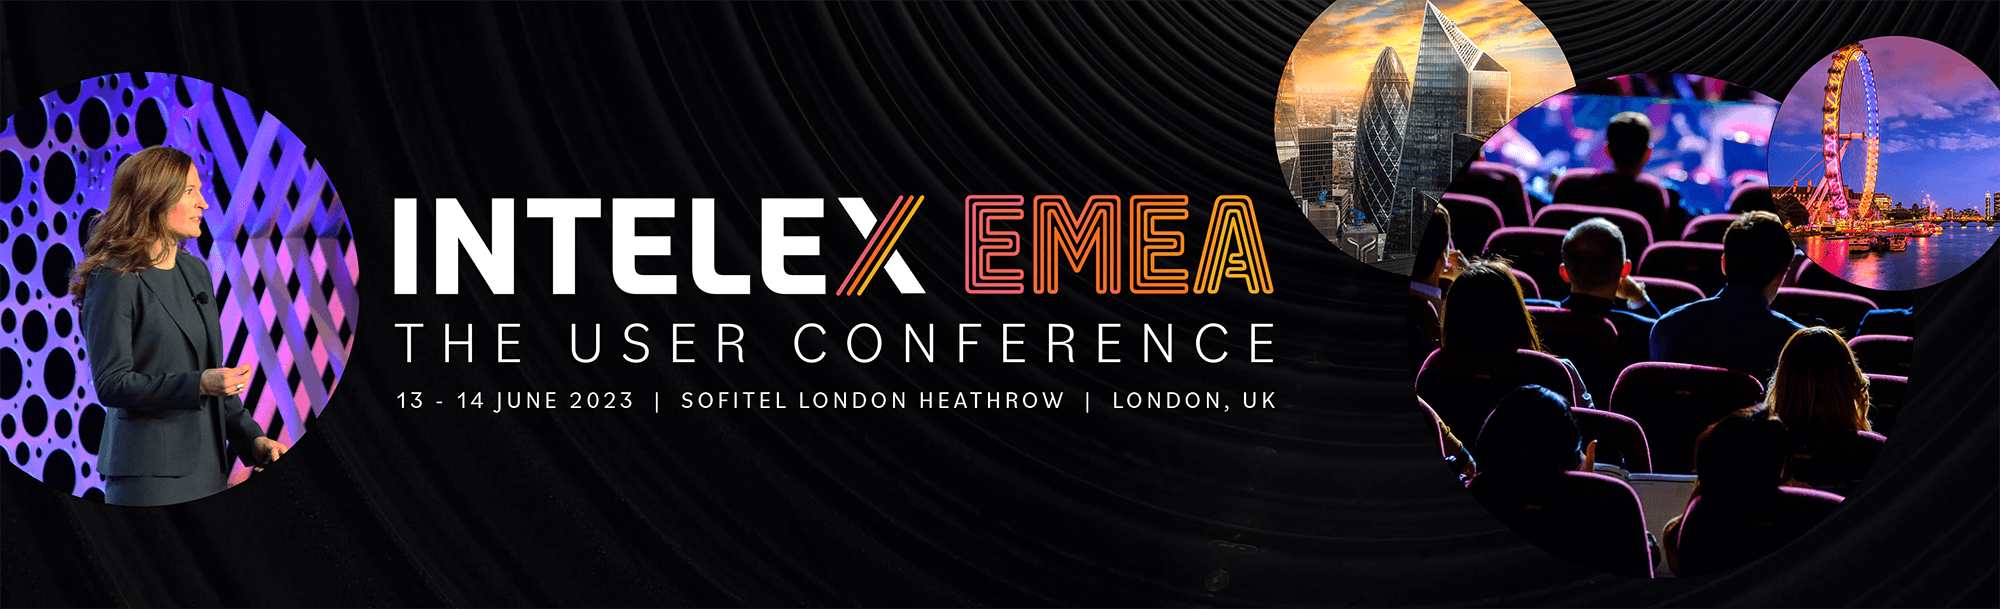 Intelex EMEA - The User Conference